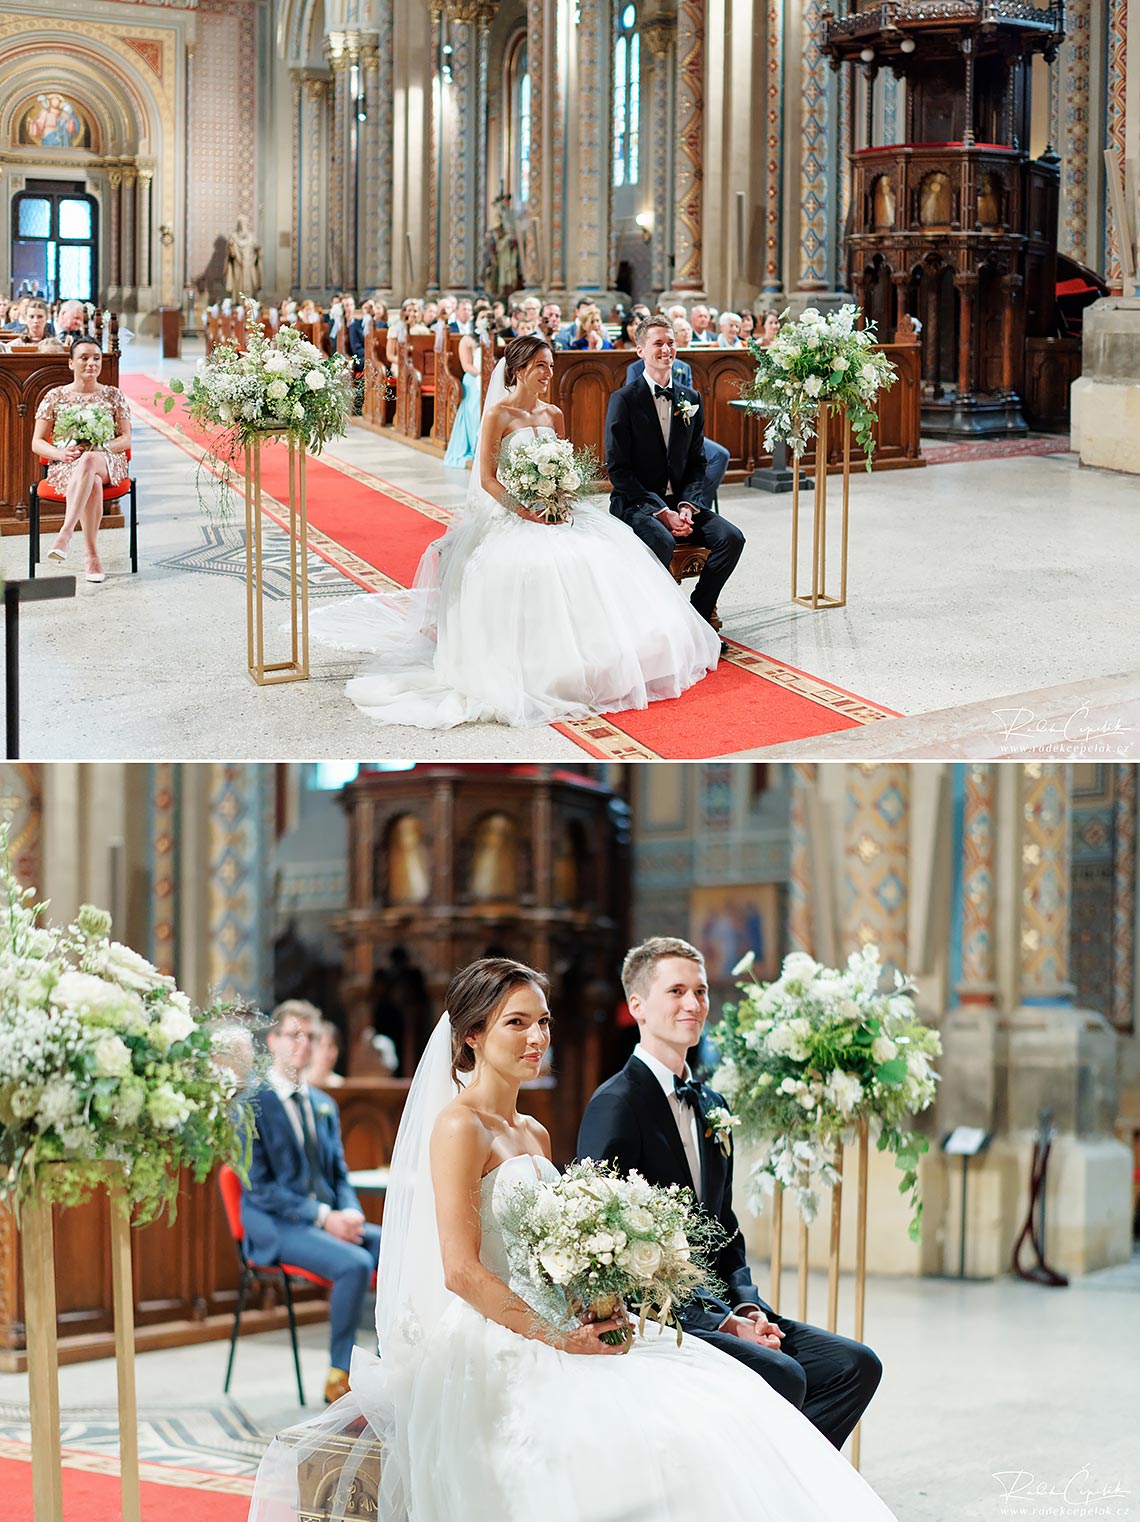 Prague church wedding ceremony